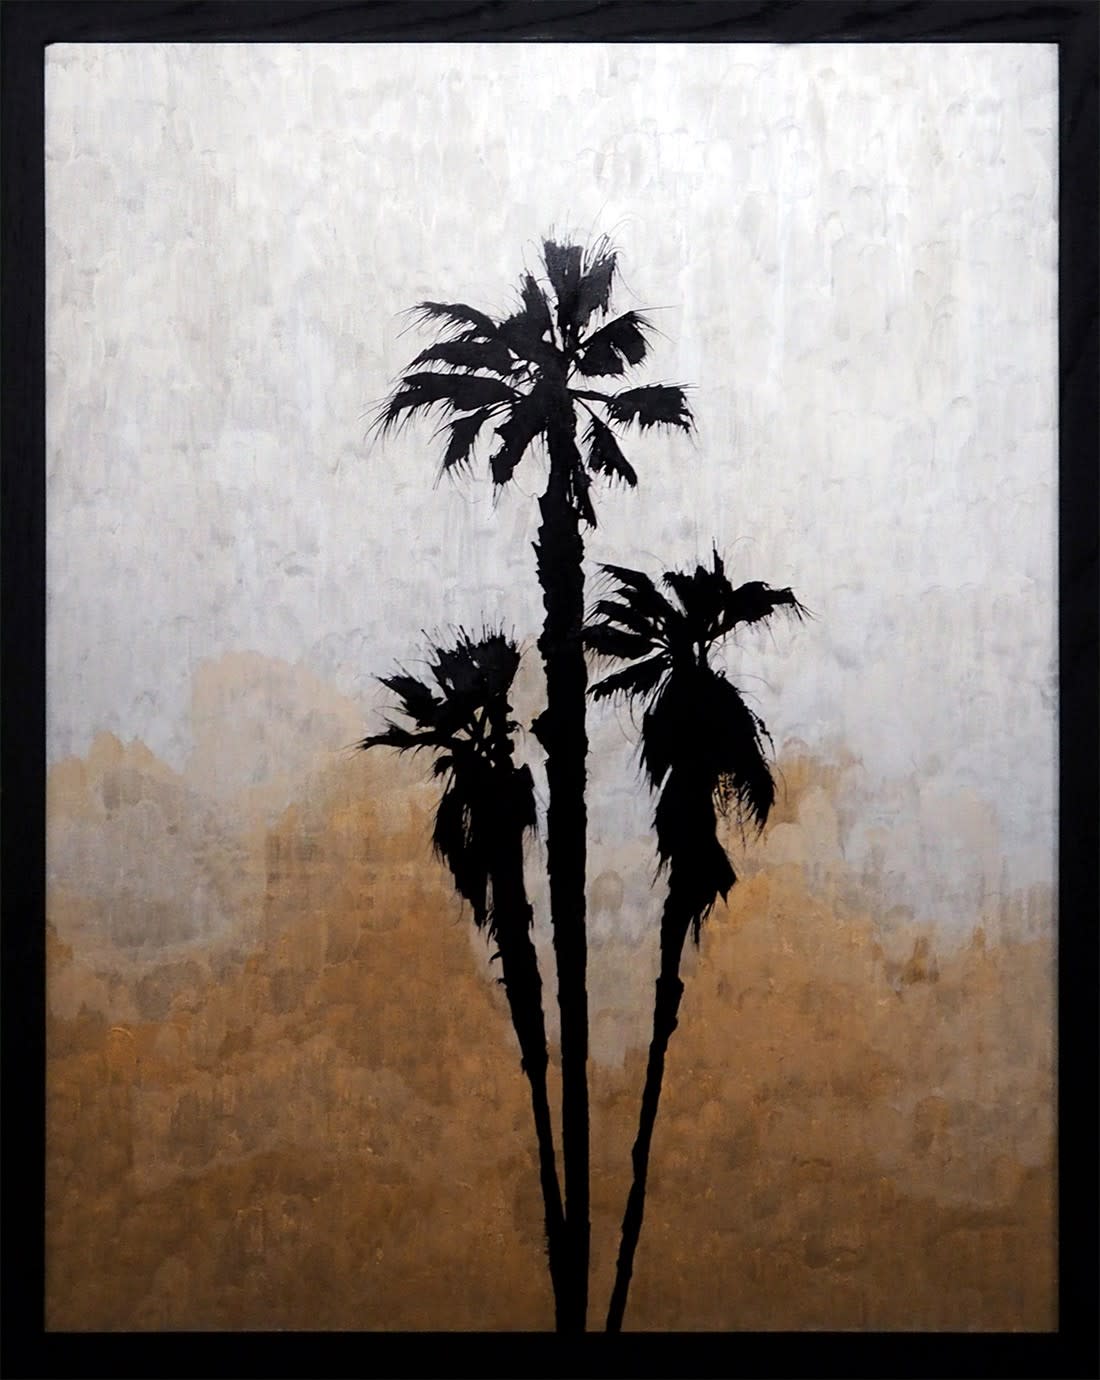 Giant Palmtrees no. 1